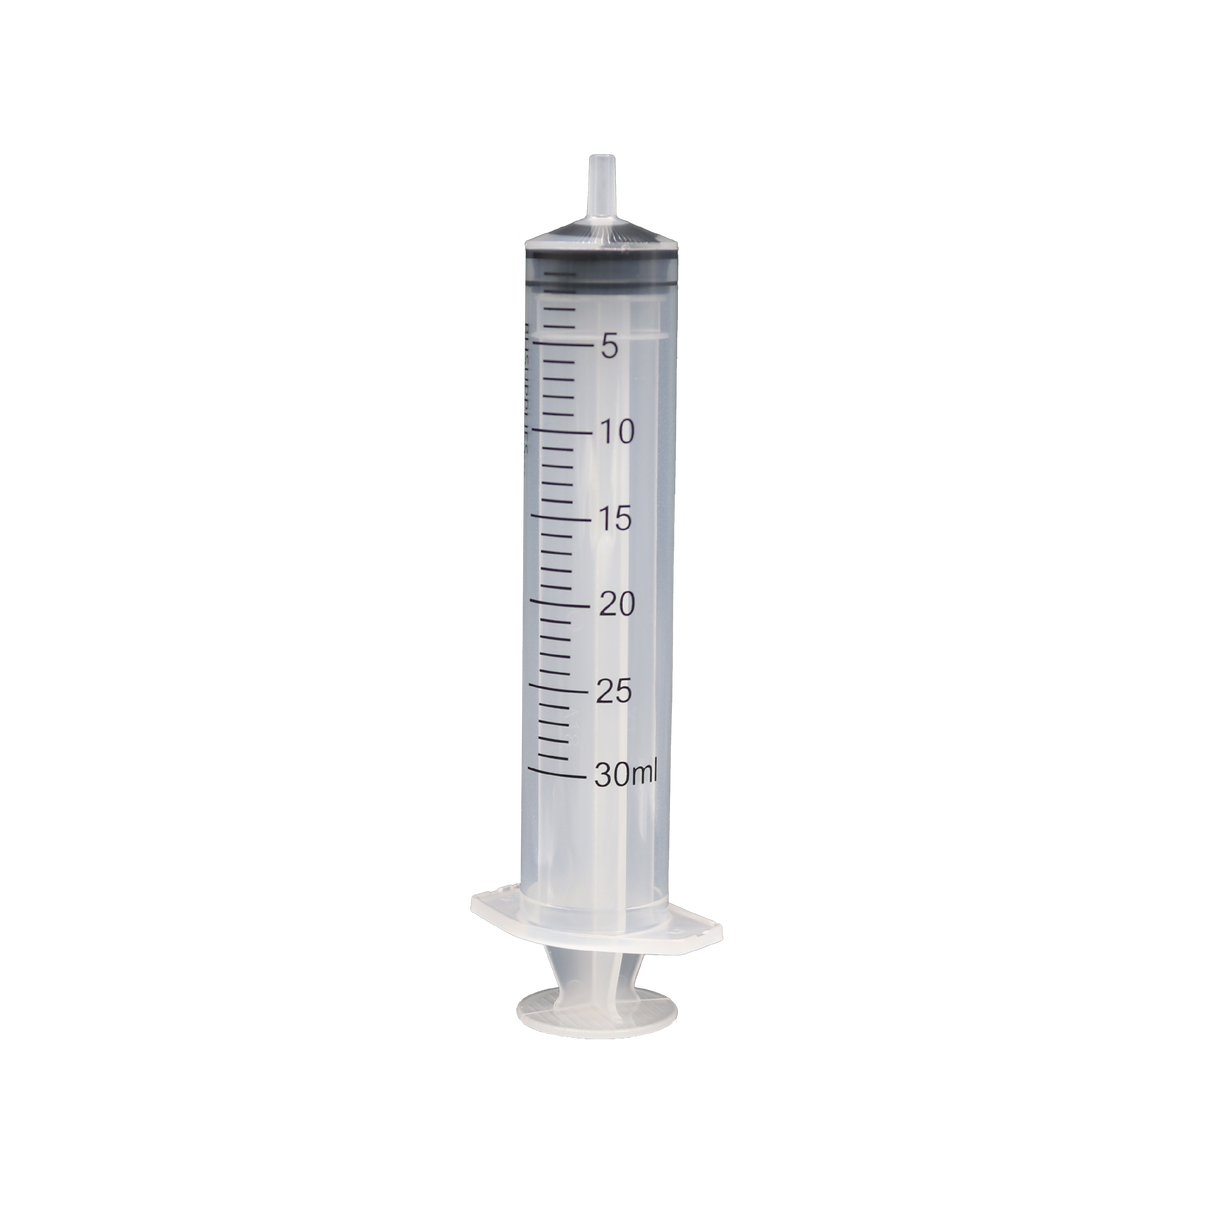 Measuring Syringe for Max Mileage